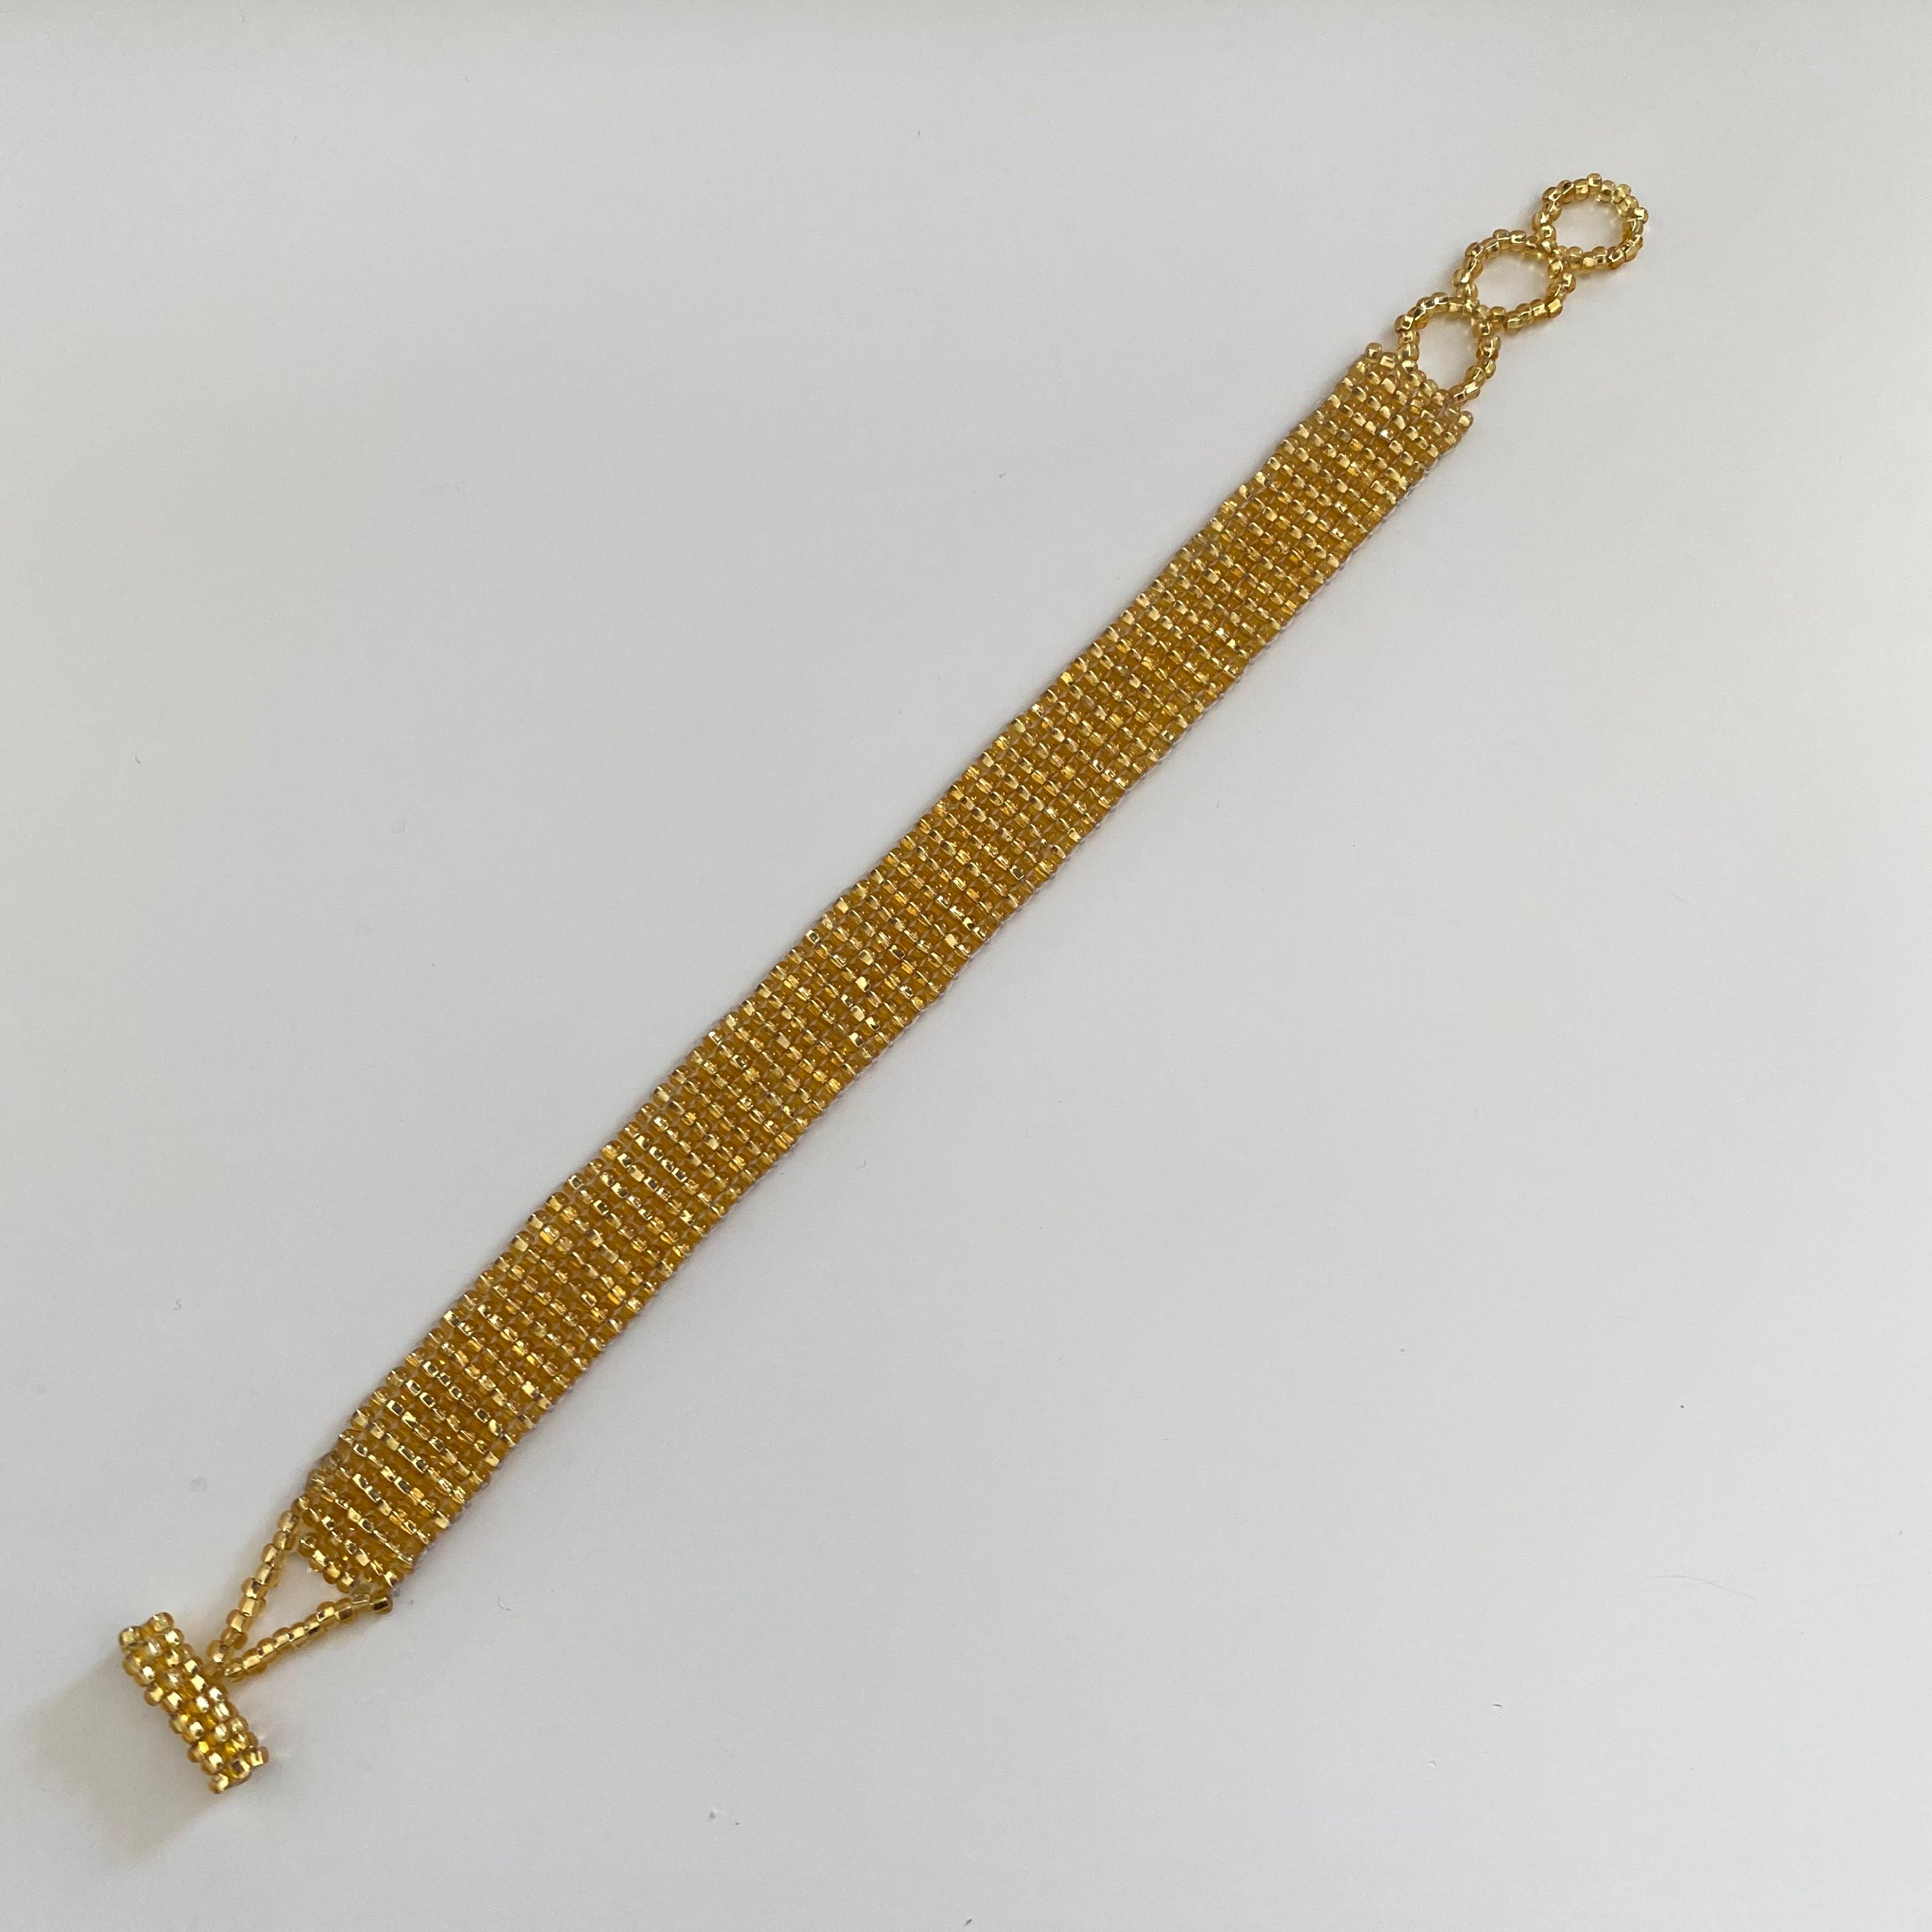 Mayan Glass Bead Bracelet - Small